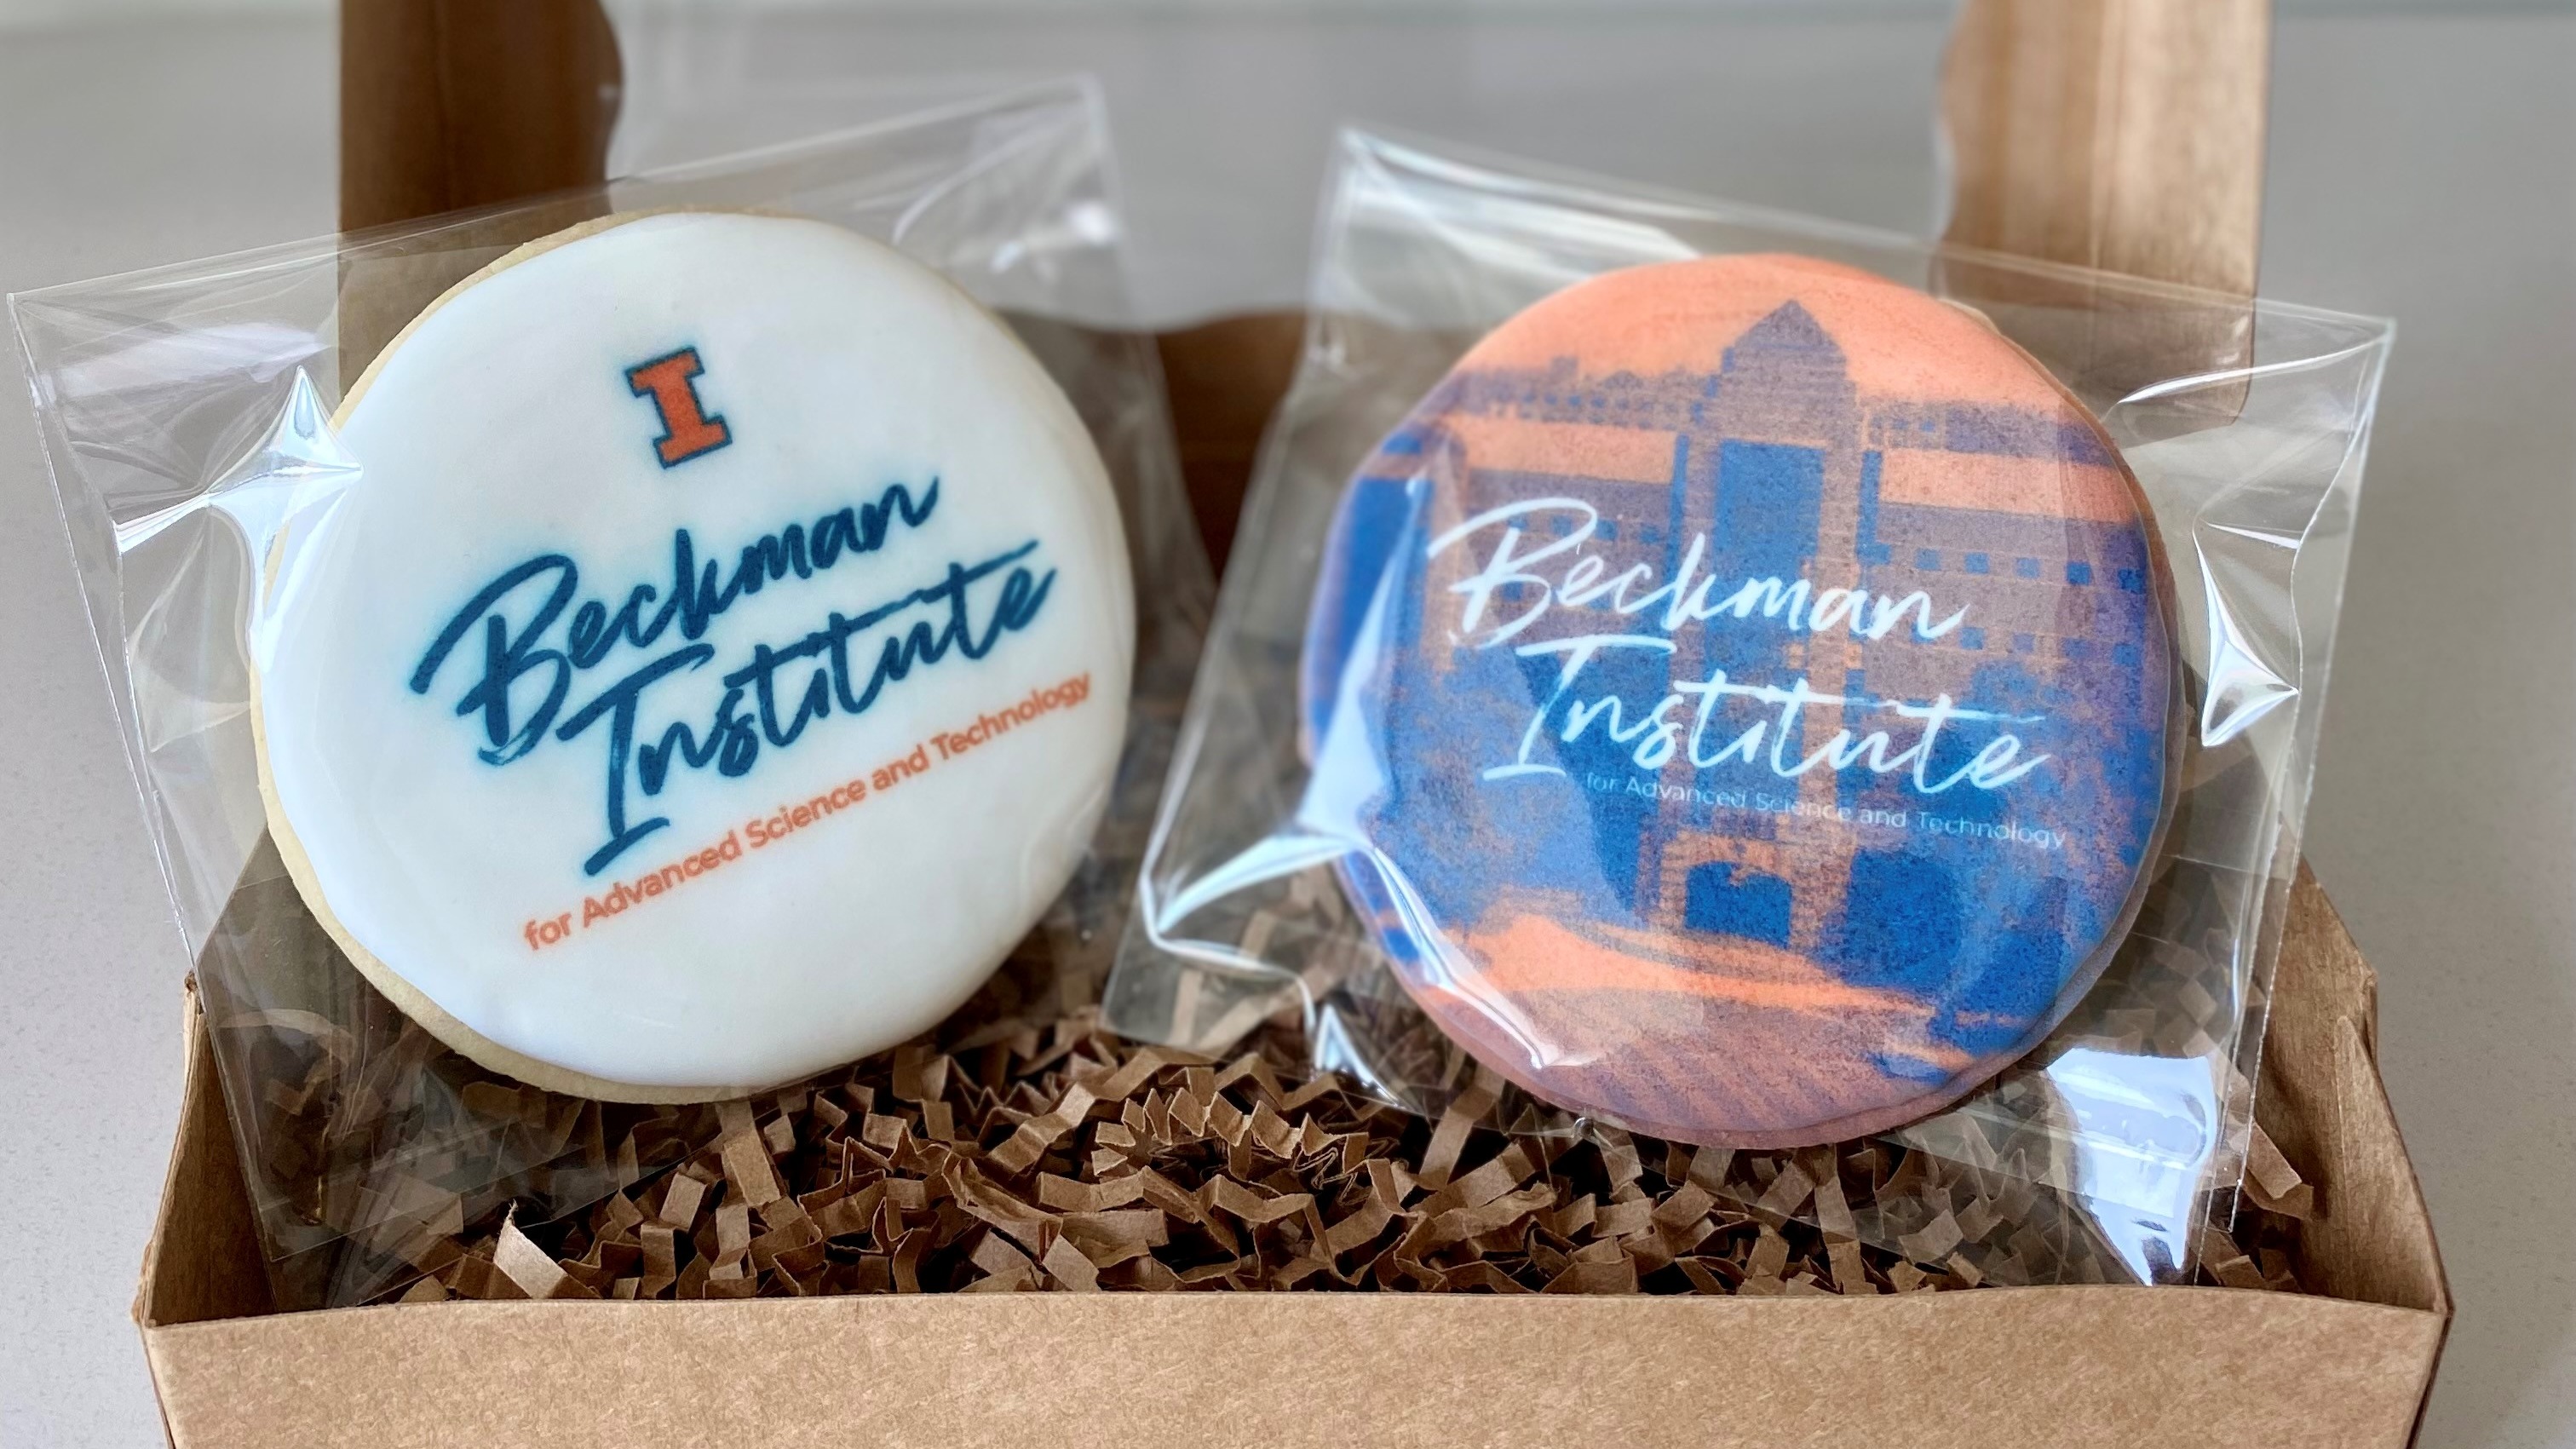 Two Beckman Institute branded cookies